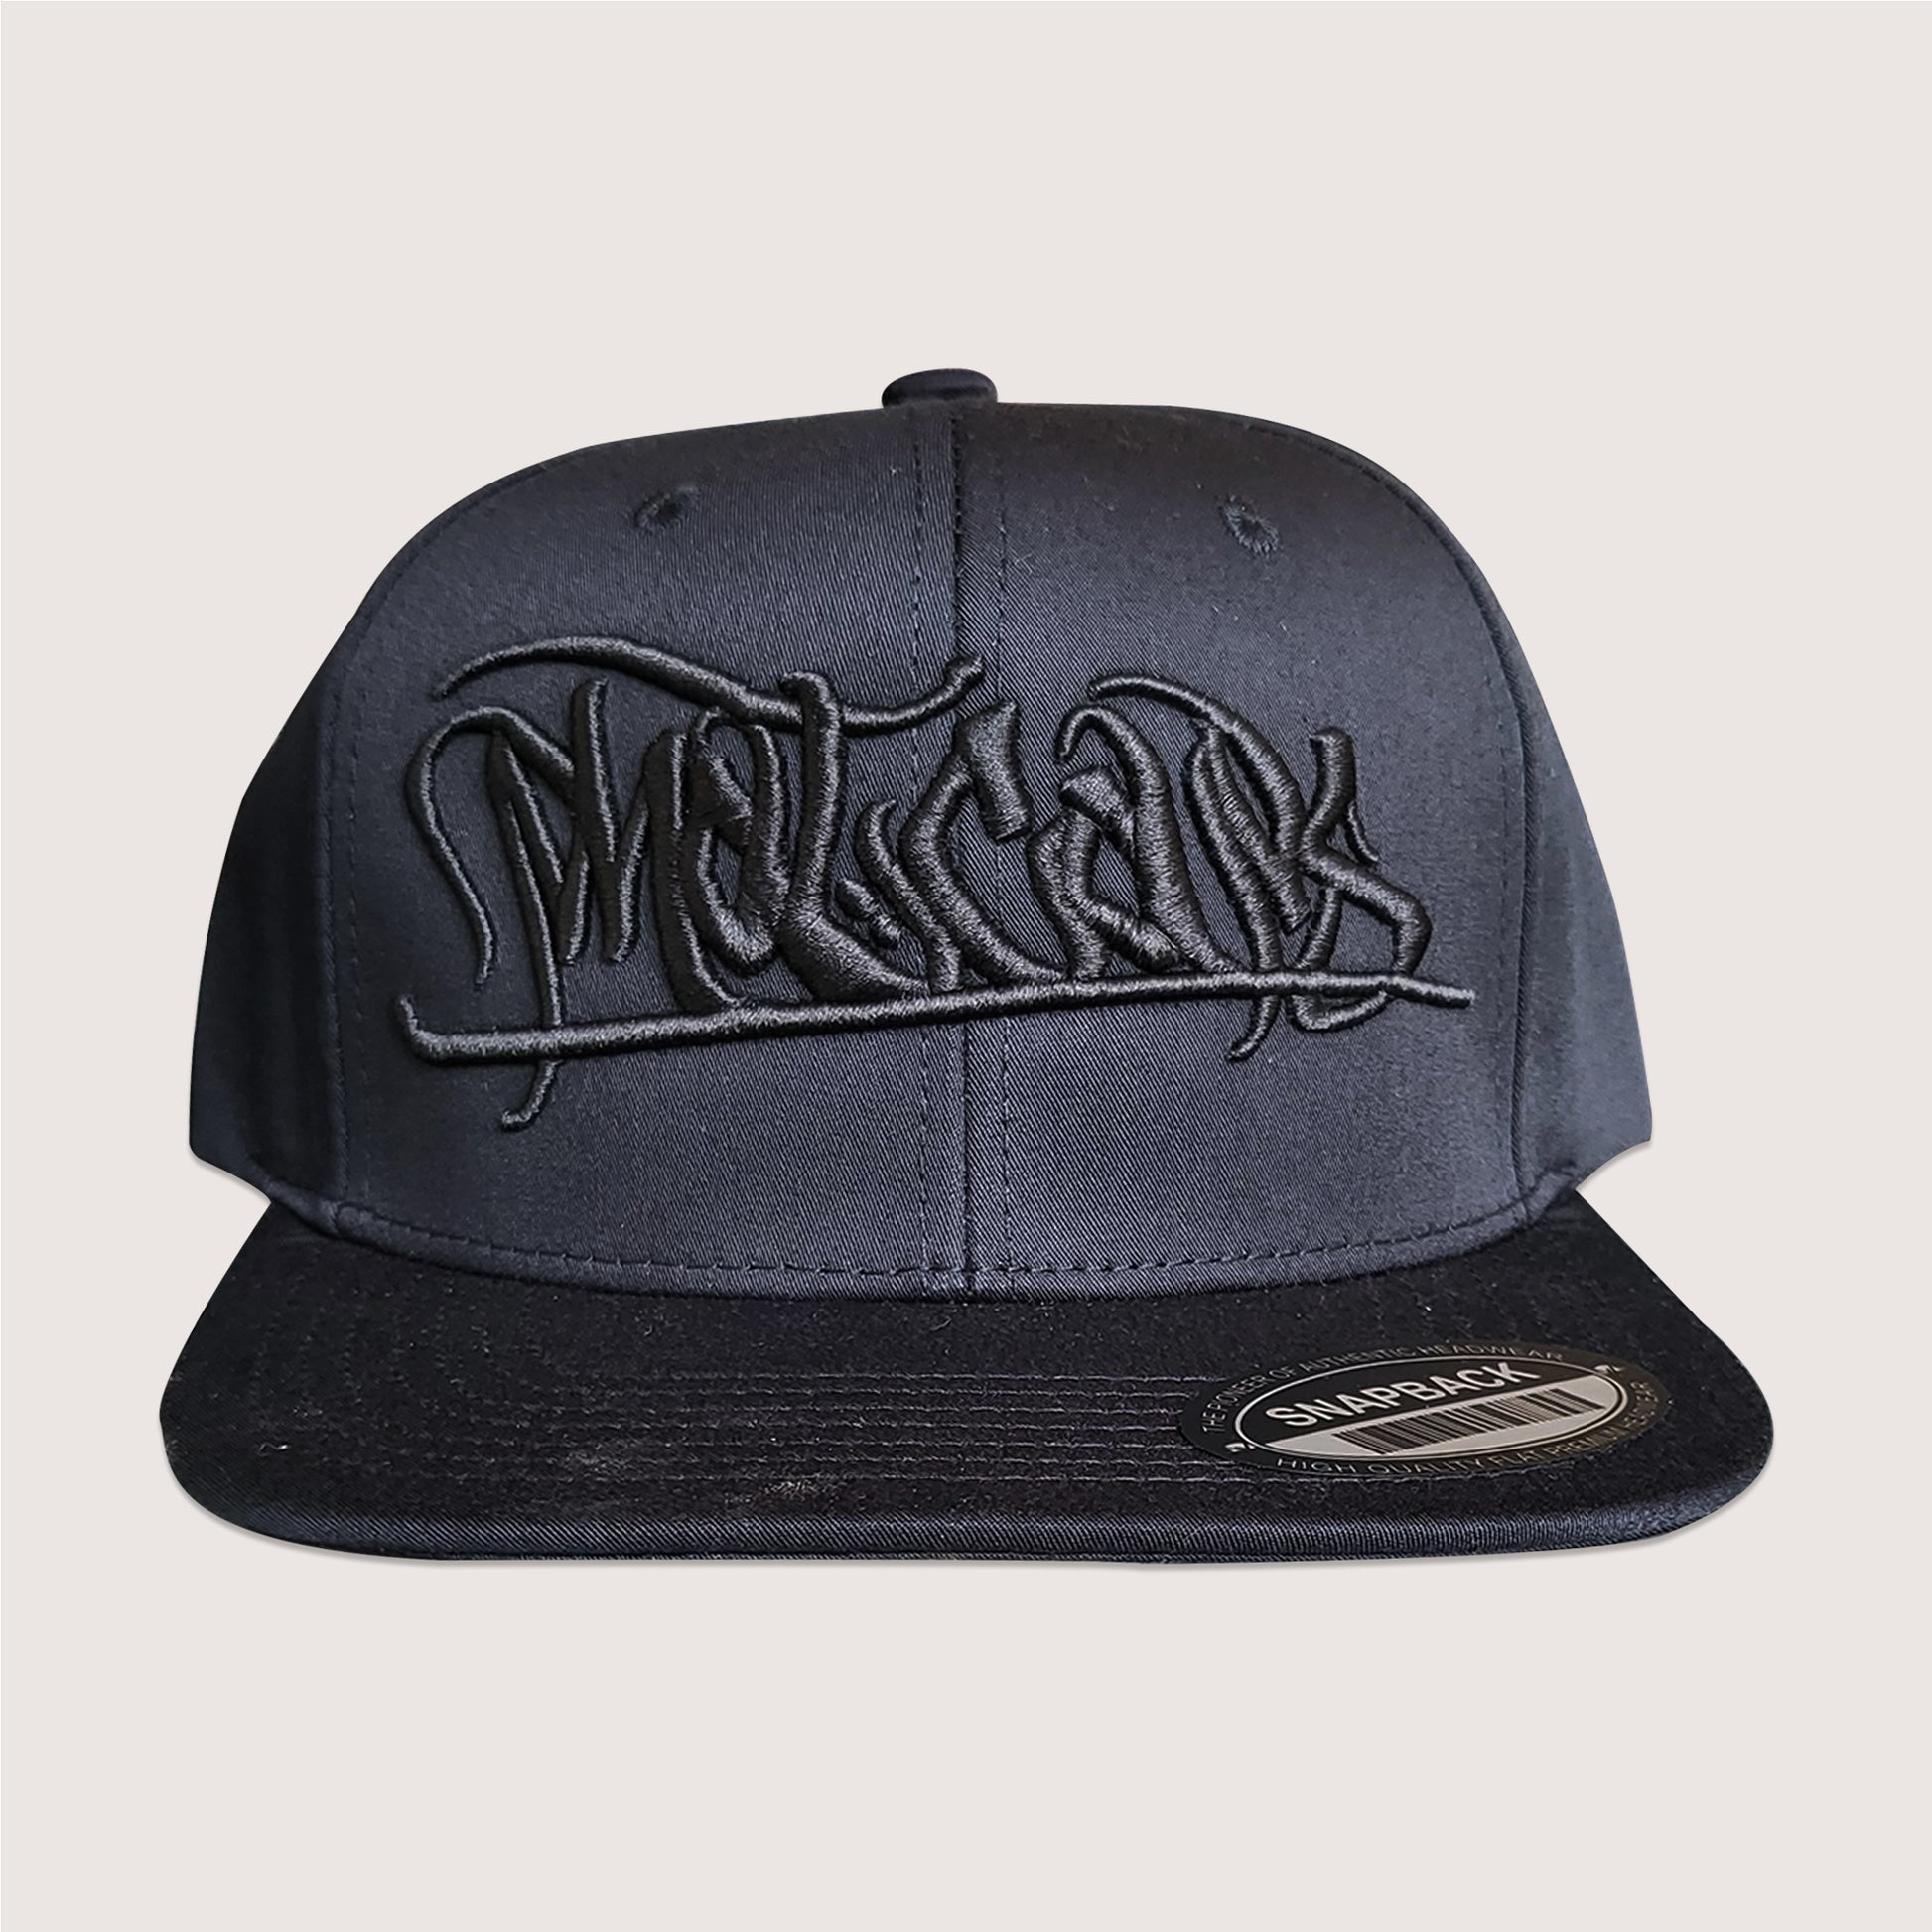 Phatcaps graffiti brand black baseball cap with black embroidery.